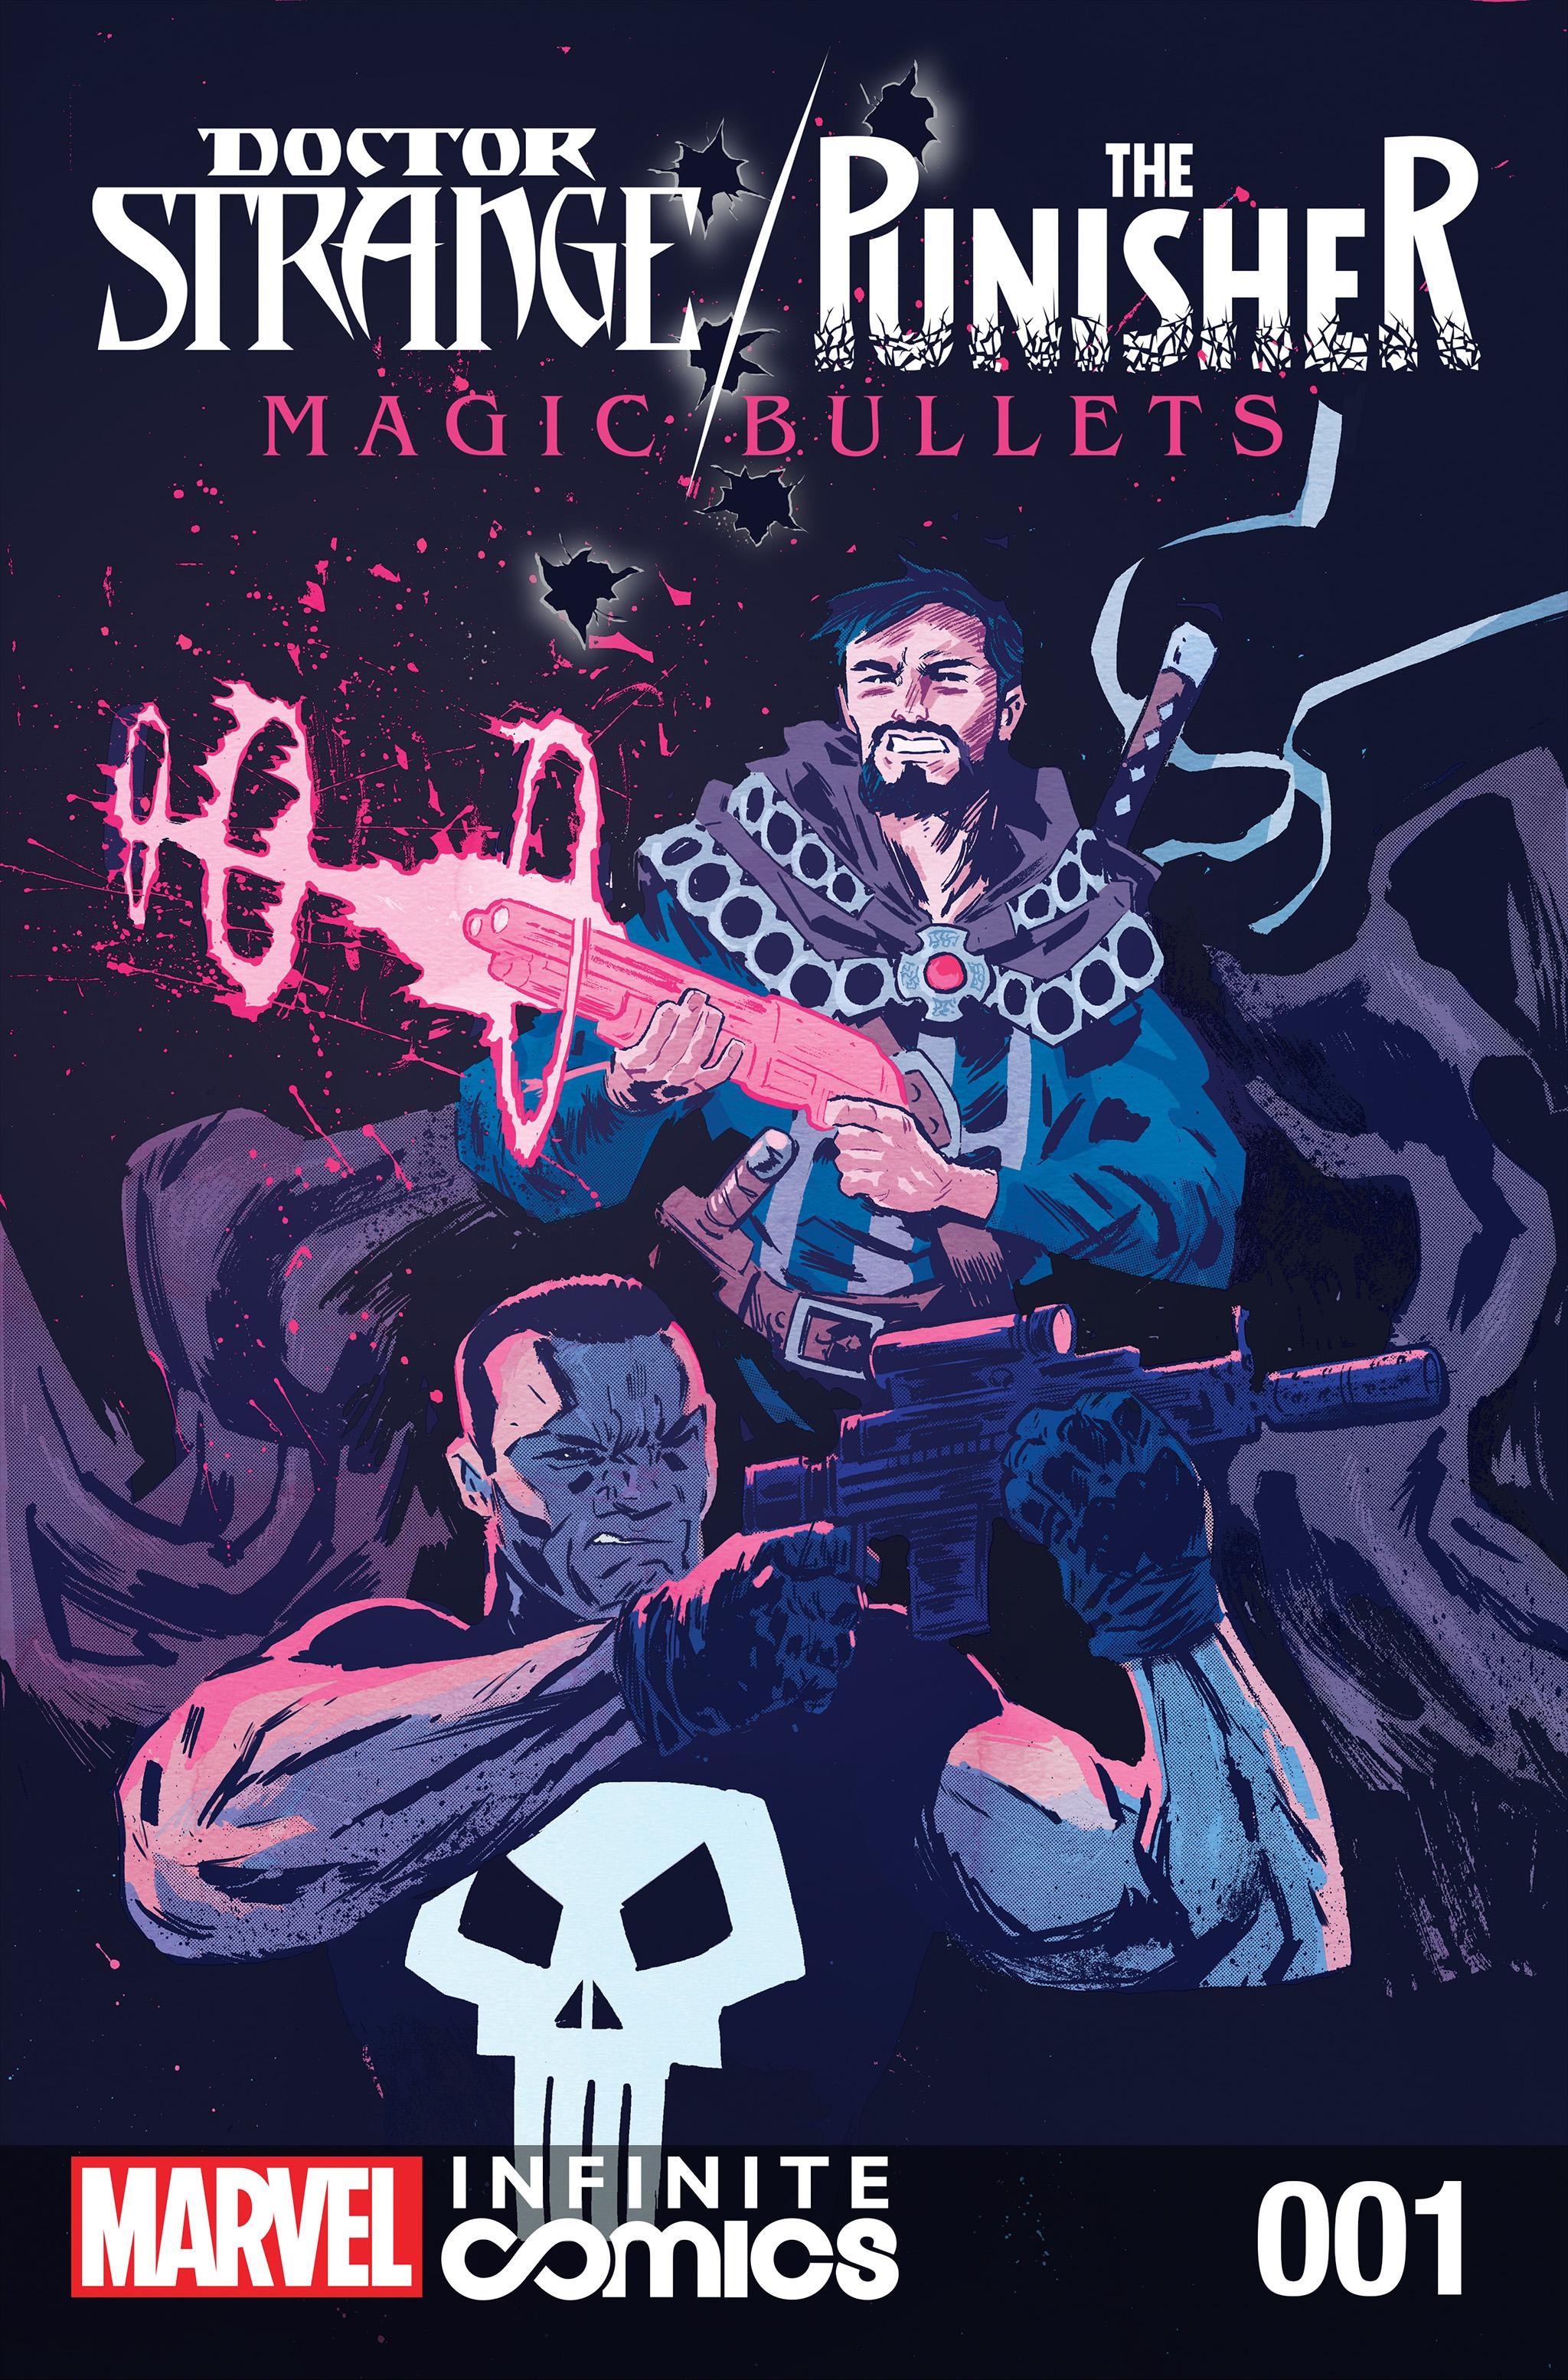 Doctor Strange / Punisher: Magic Bullets Infinite Comic Vol. 1 #1